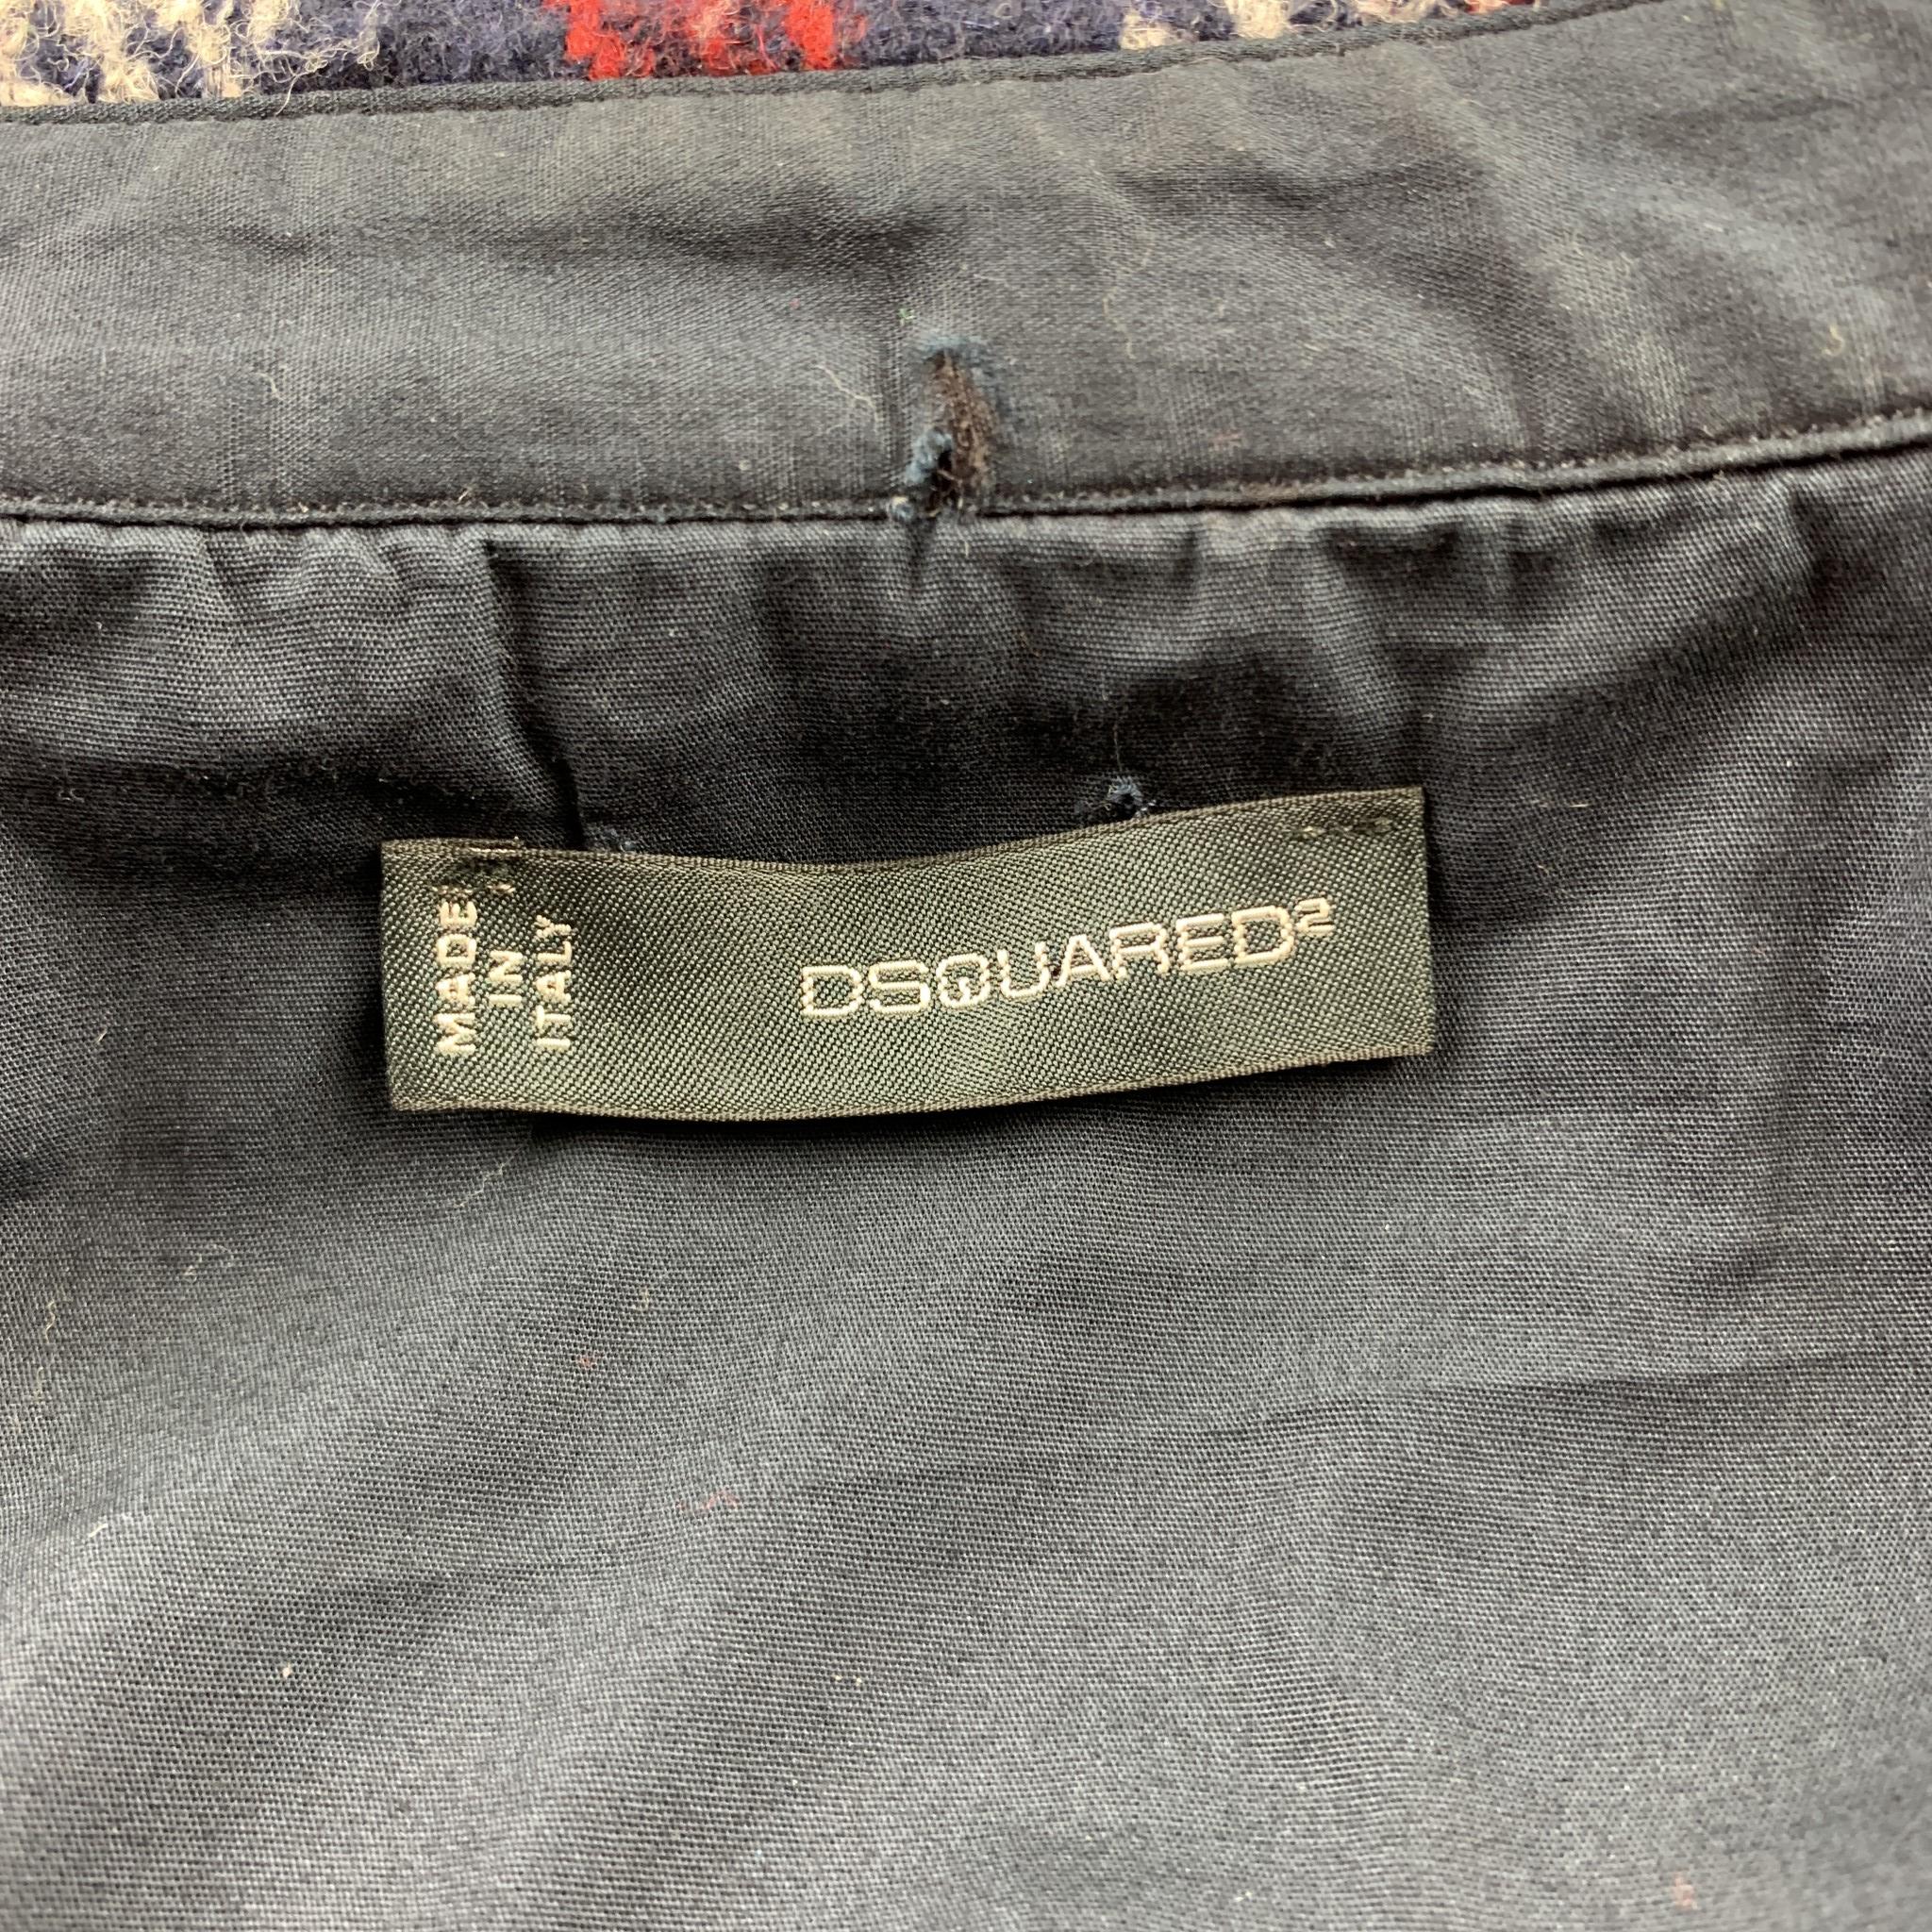 Black DSQUARED2 Size L Navy & Tan Plaid Wool Patch Pockets Long Sleeve Shirt Jacket